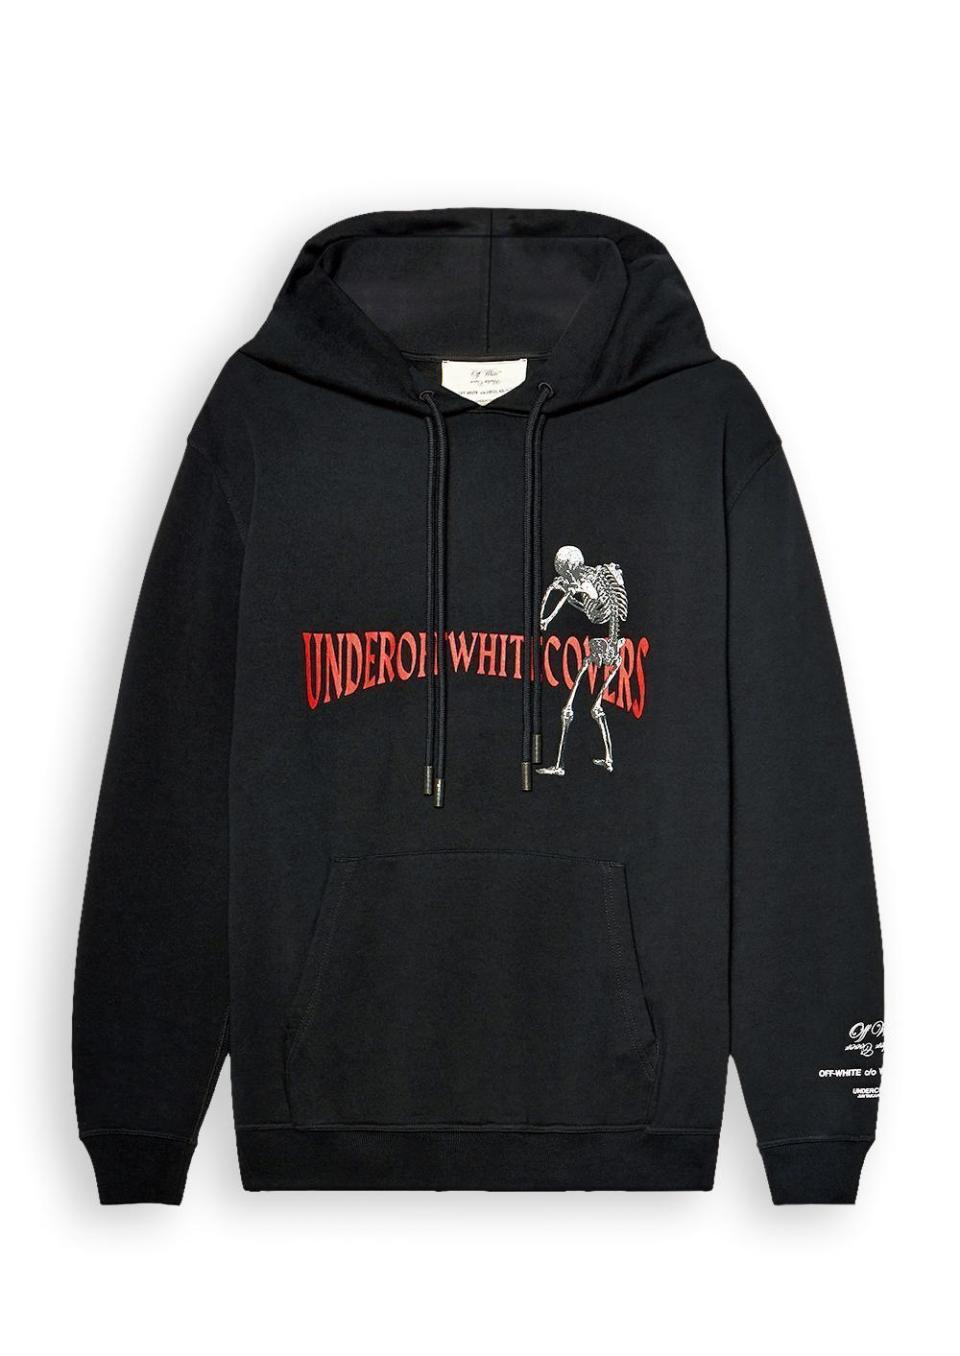 OFF-WHITE x Undercover聯名系列黑色骷髏圖案連帽衛衣 NT$20,800（OFF-WHITE提供）